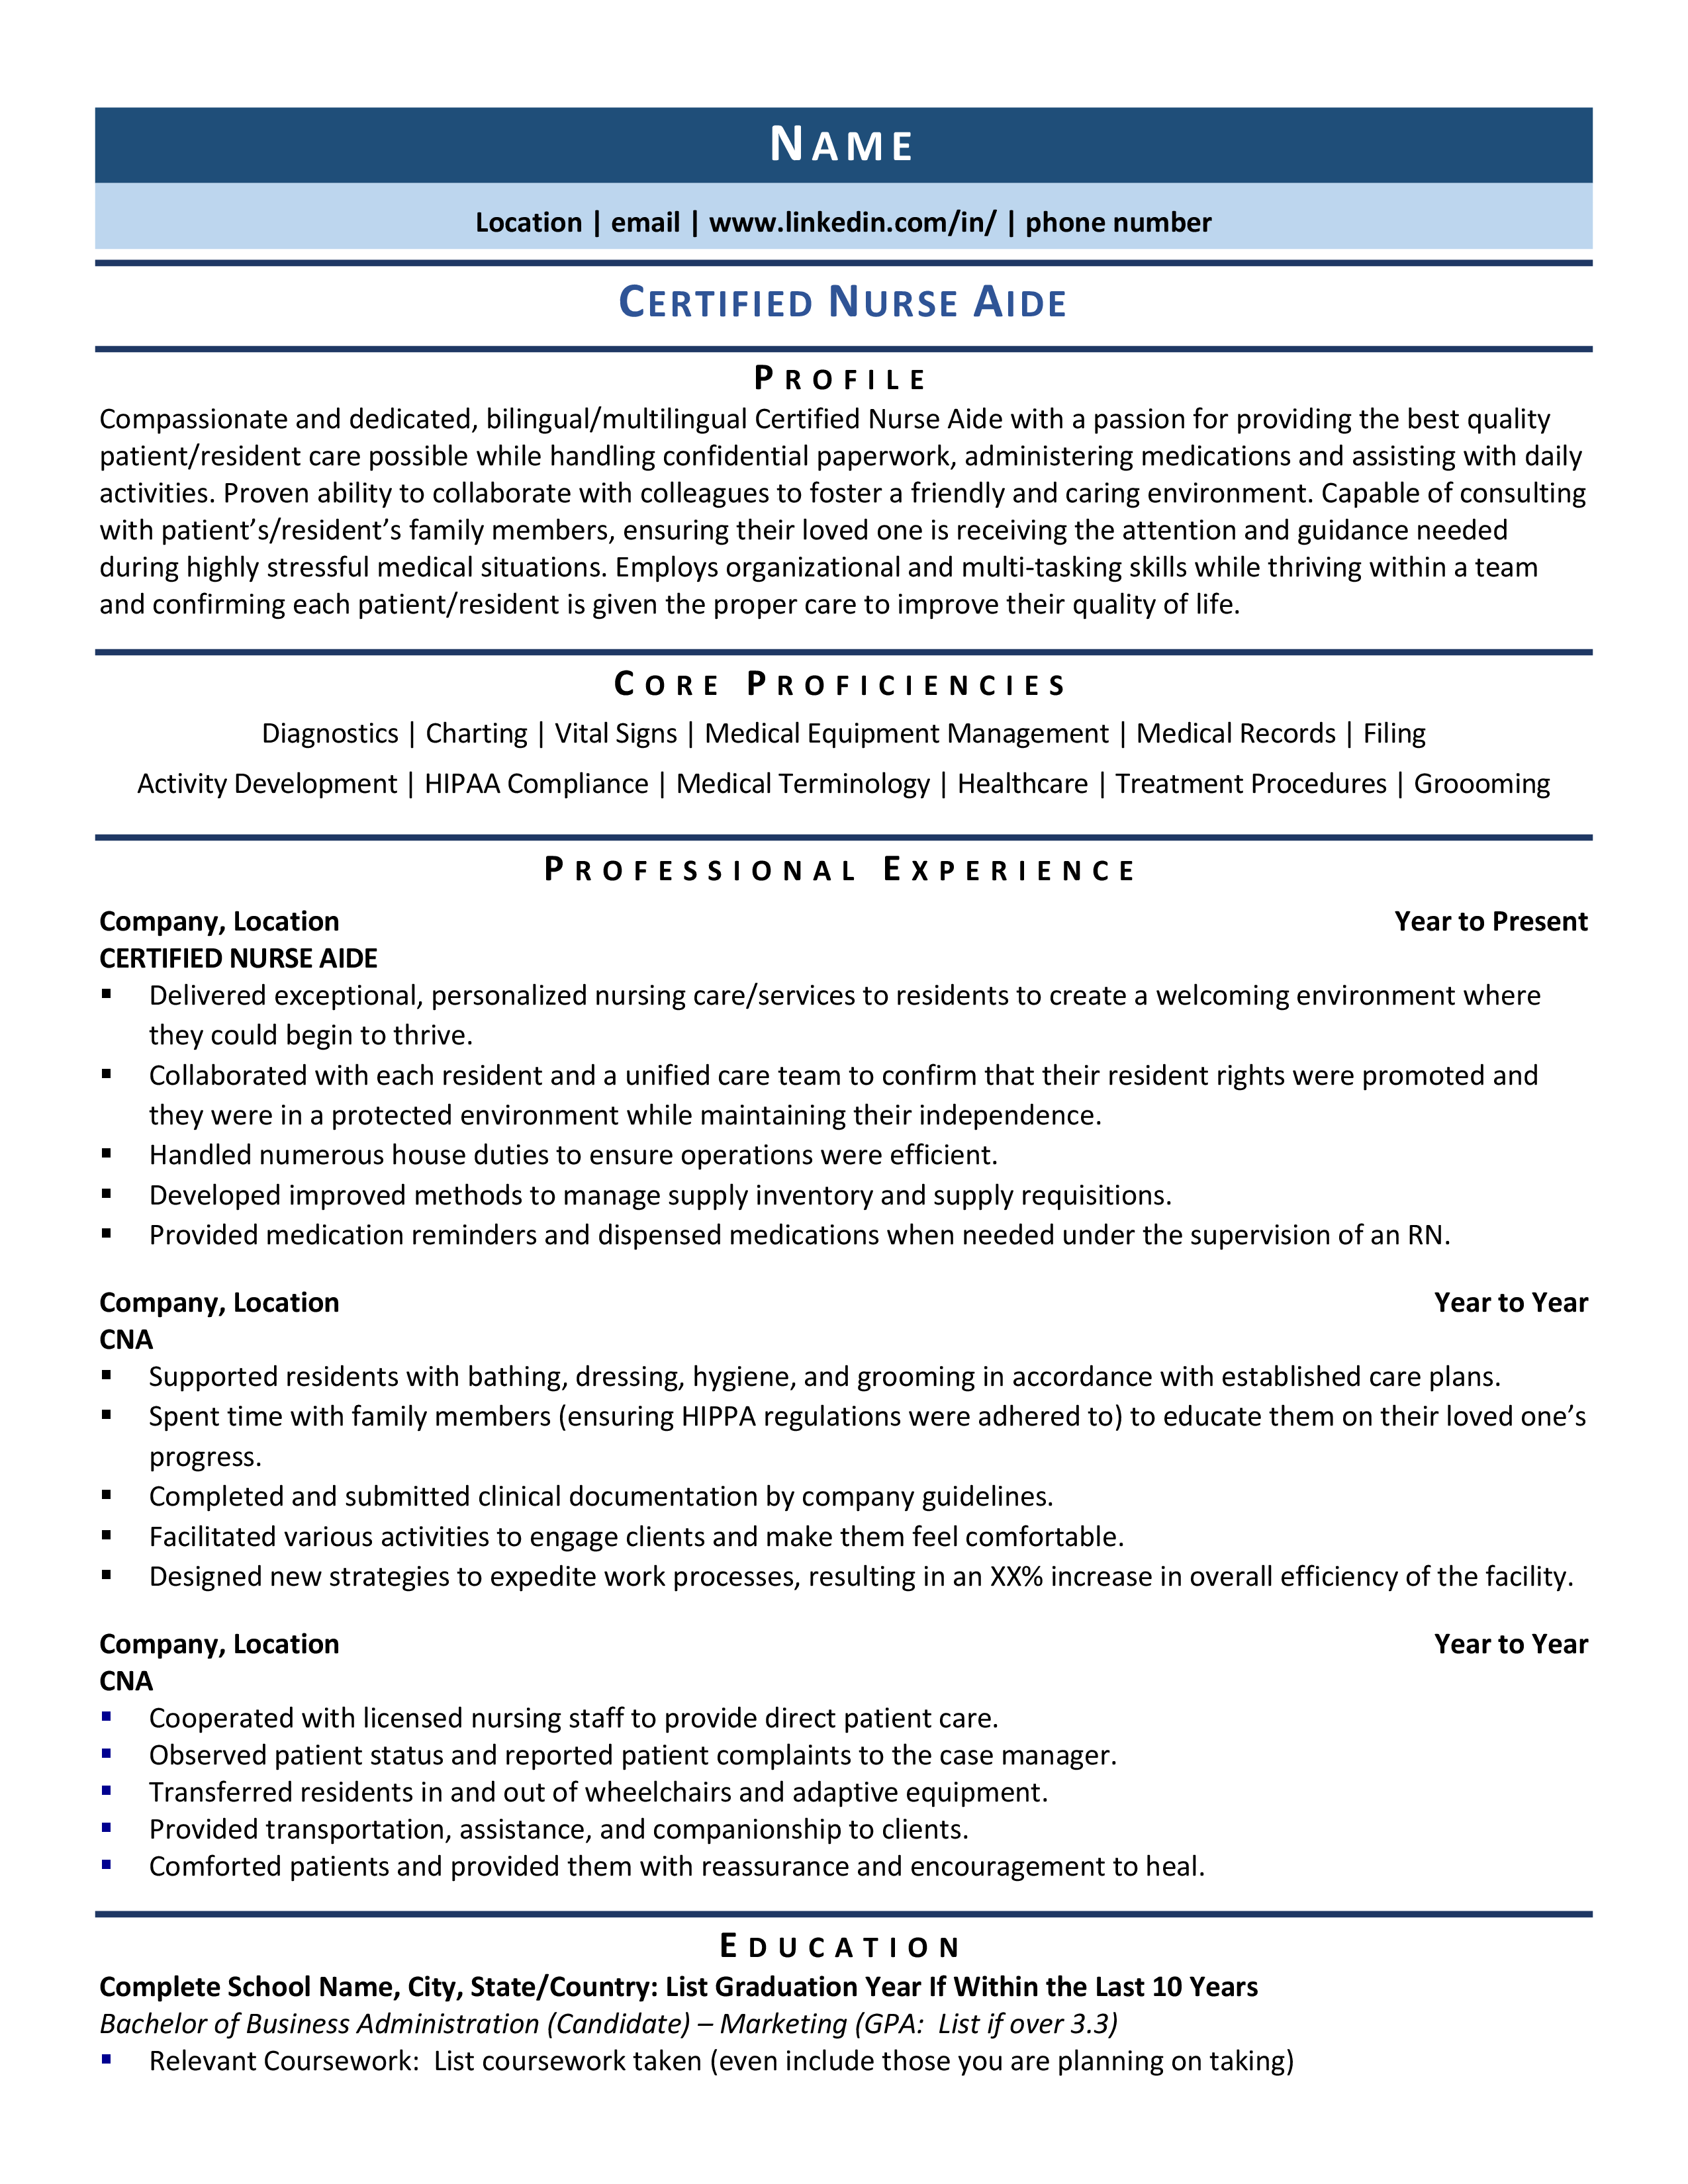 resume-help-nursing